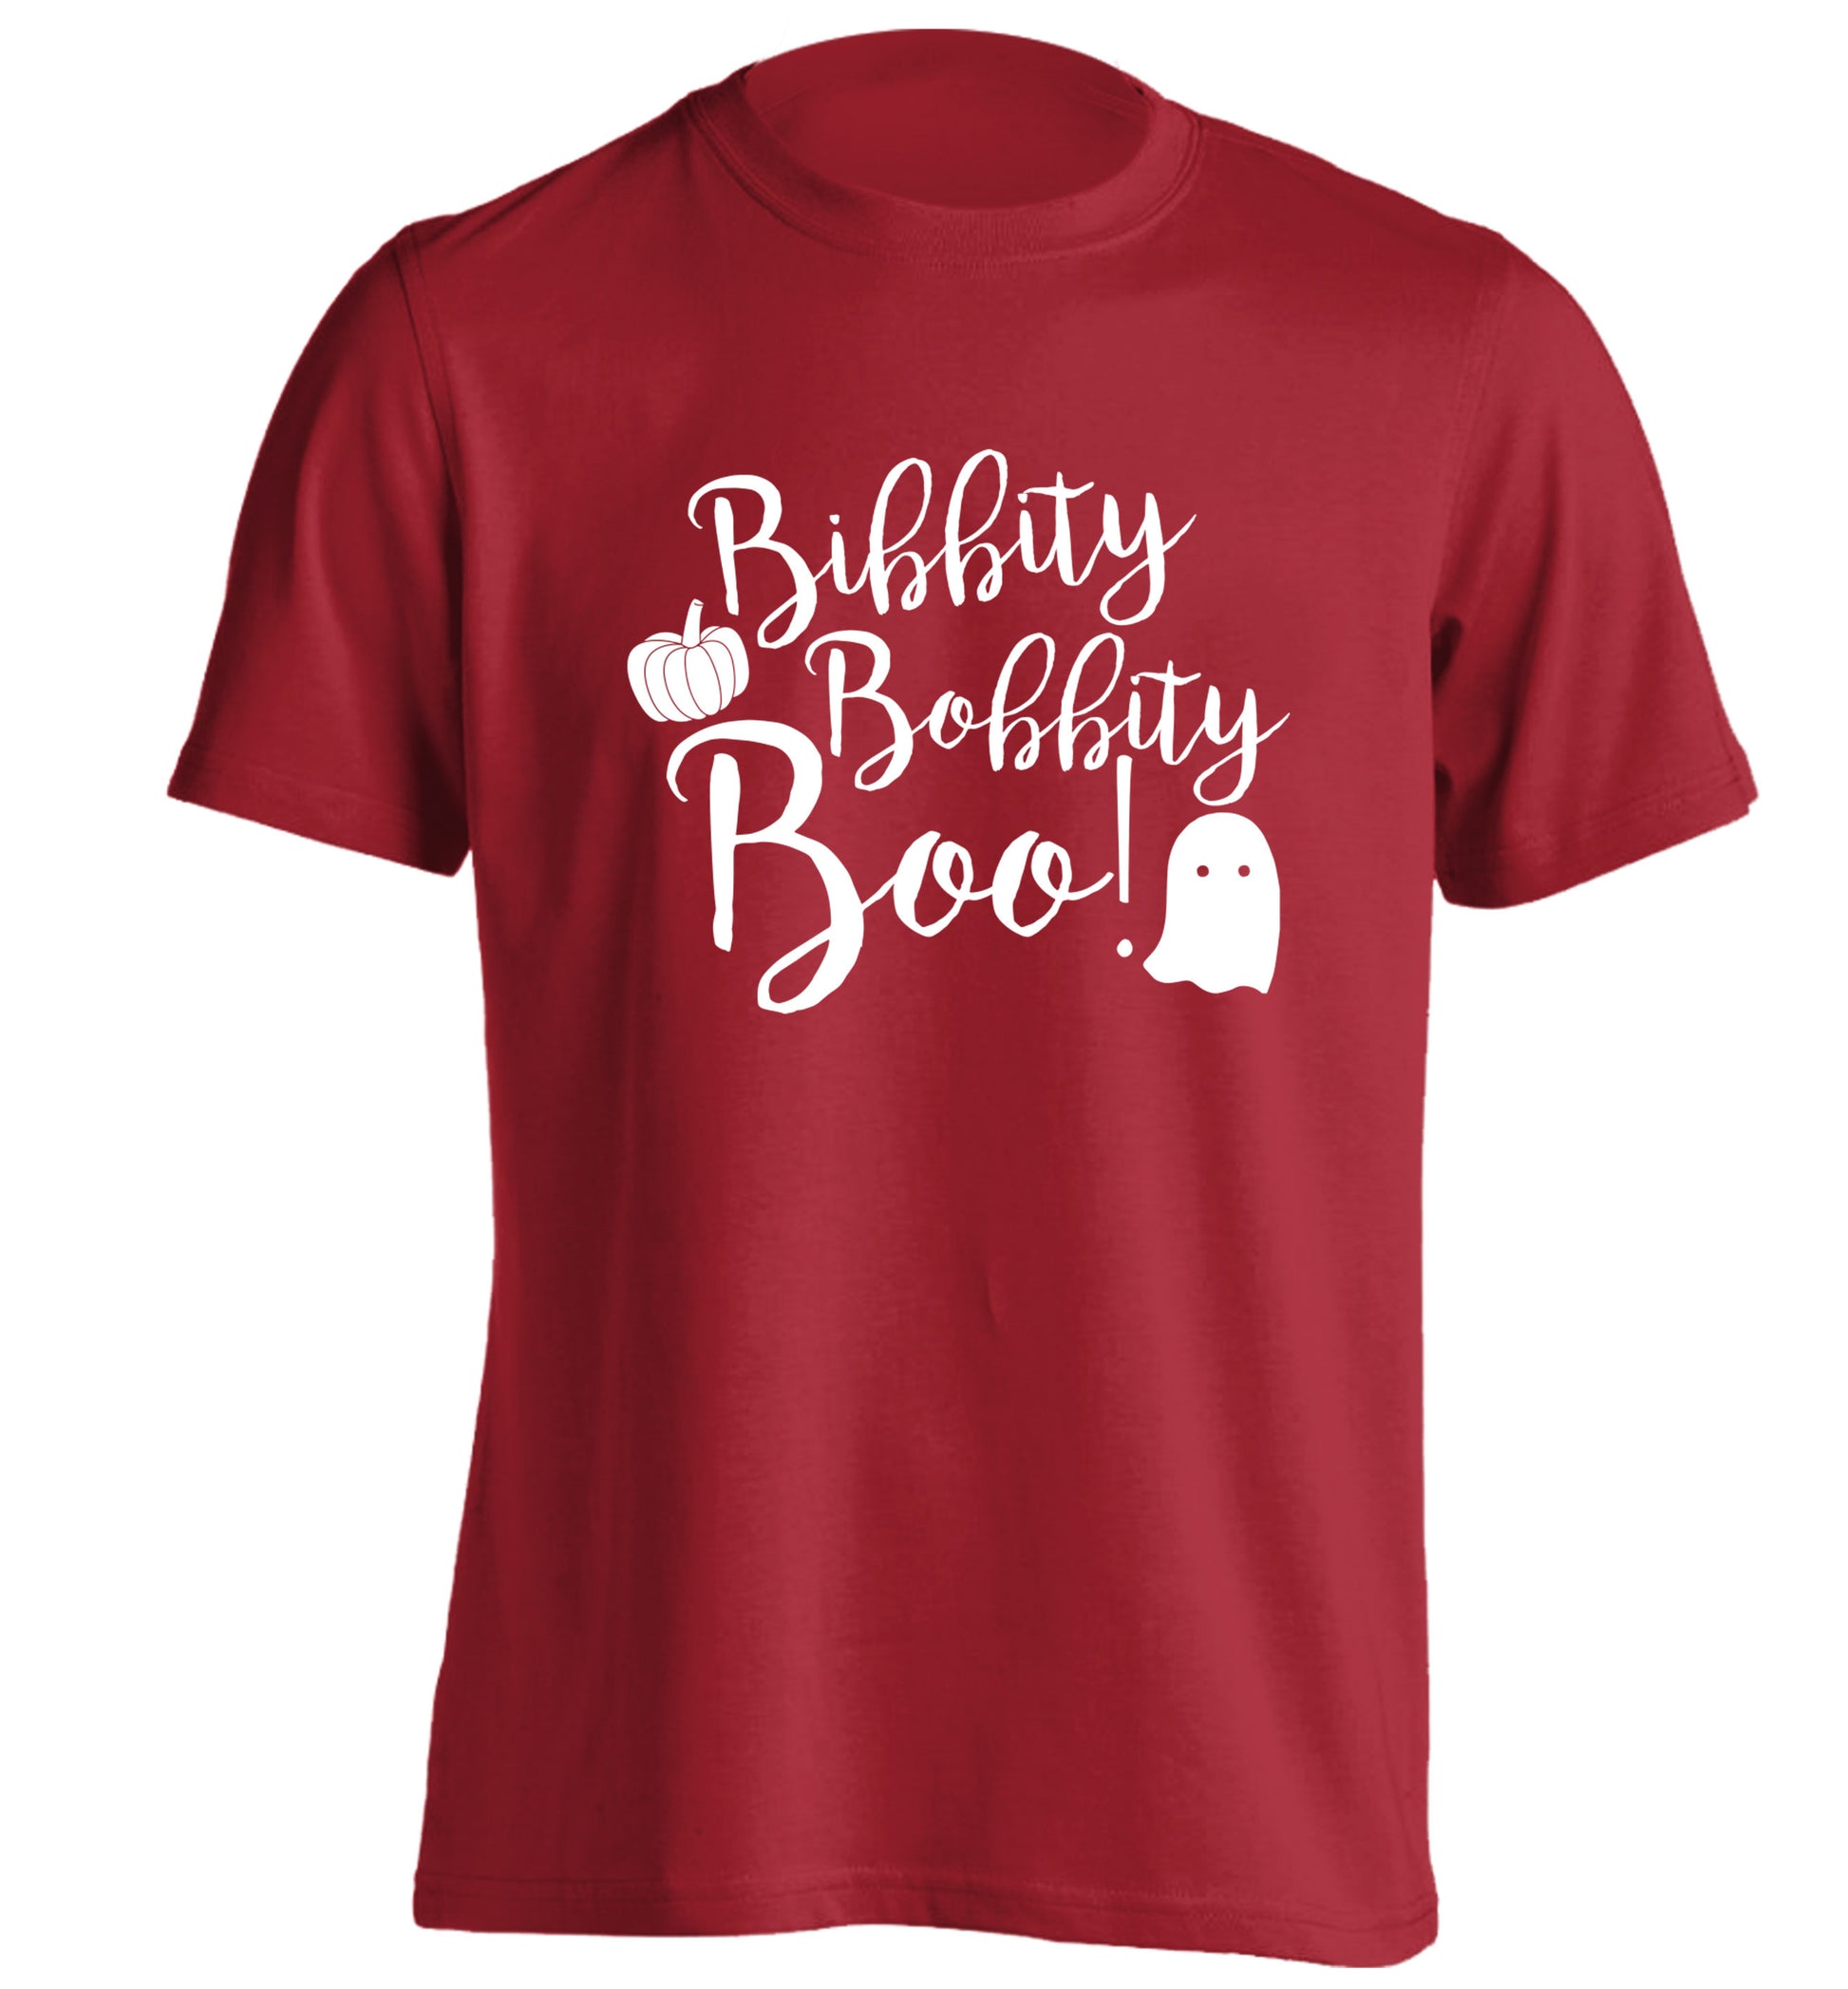 Bibbity bobbity boo! adults unisex red Tshirt 2XL